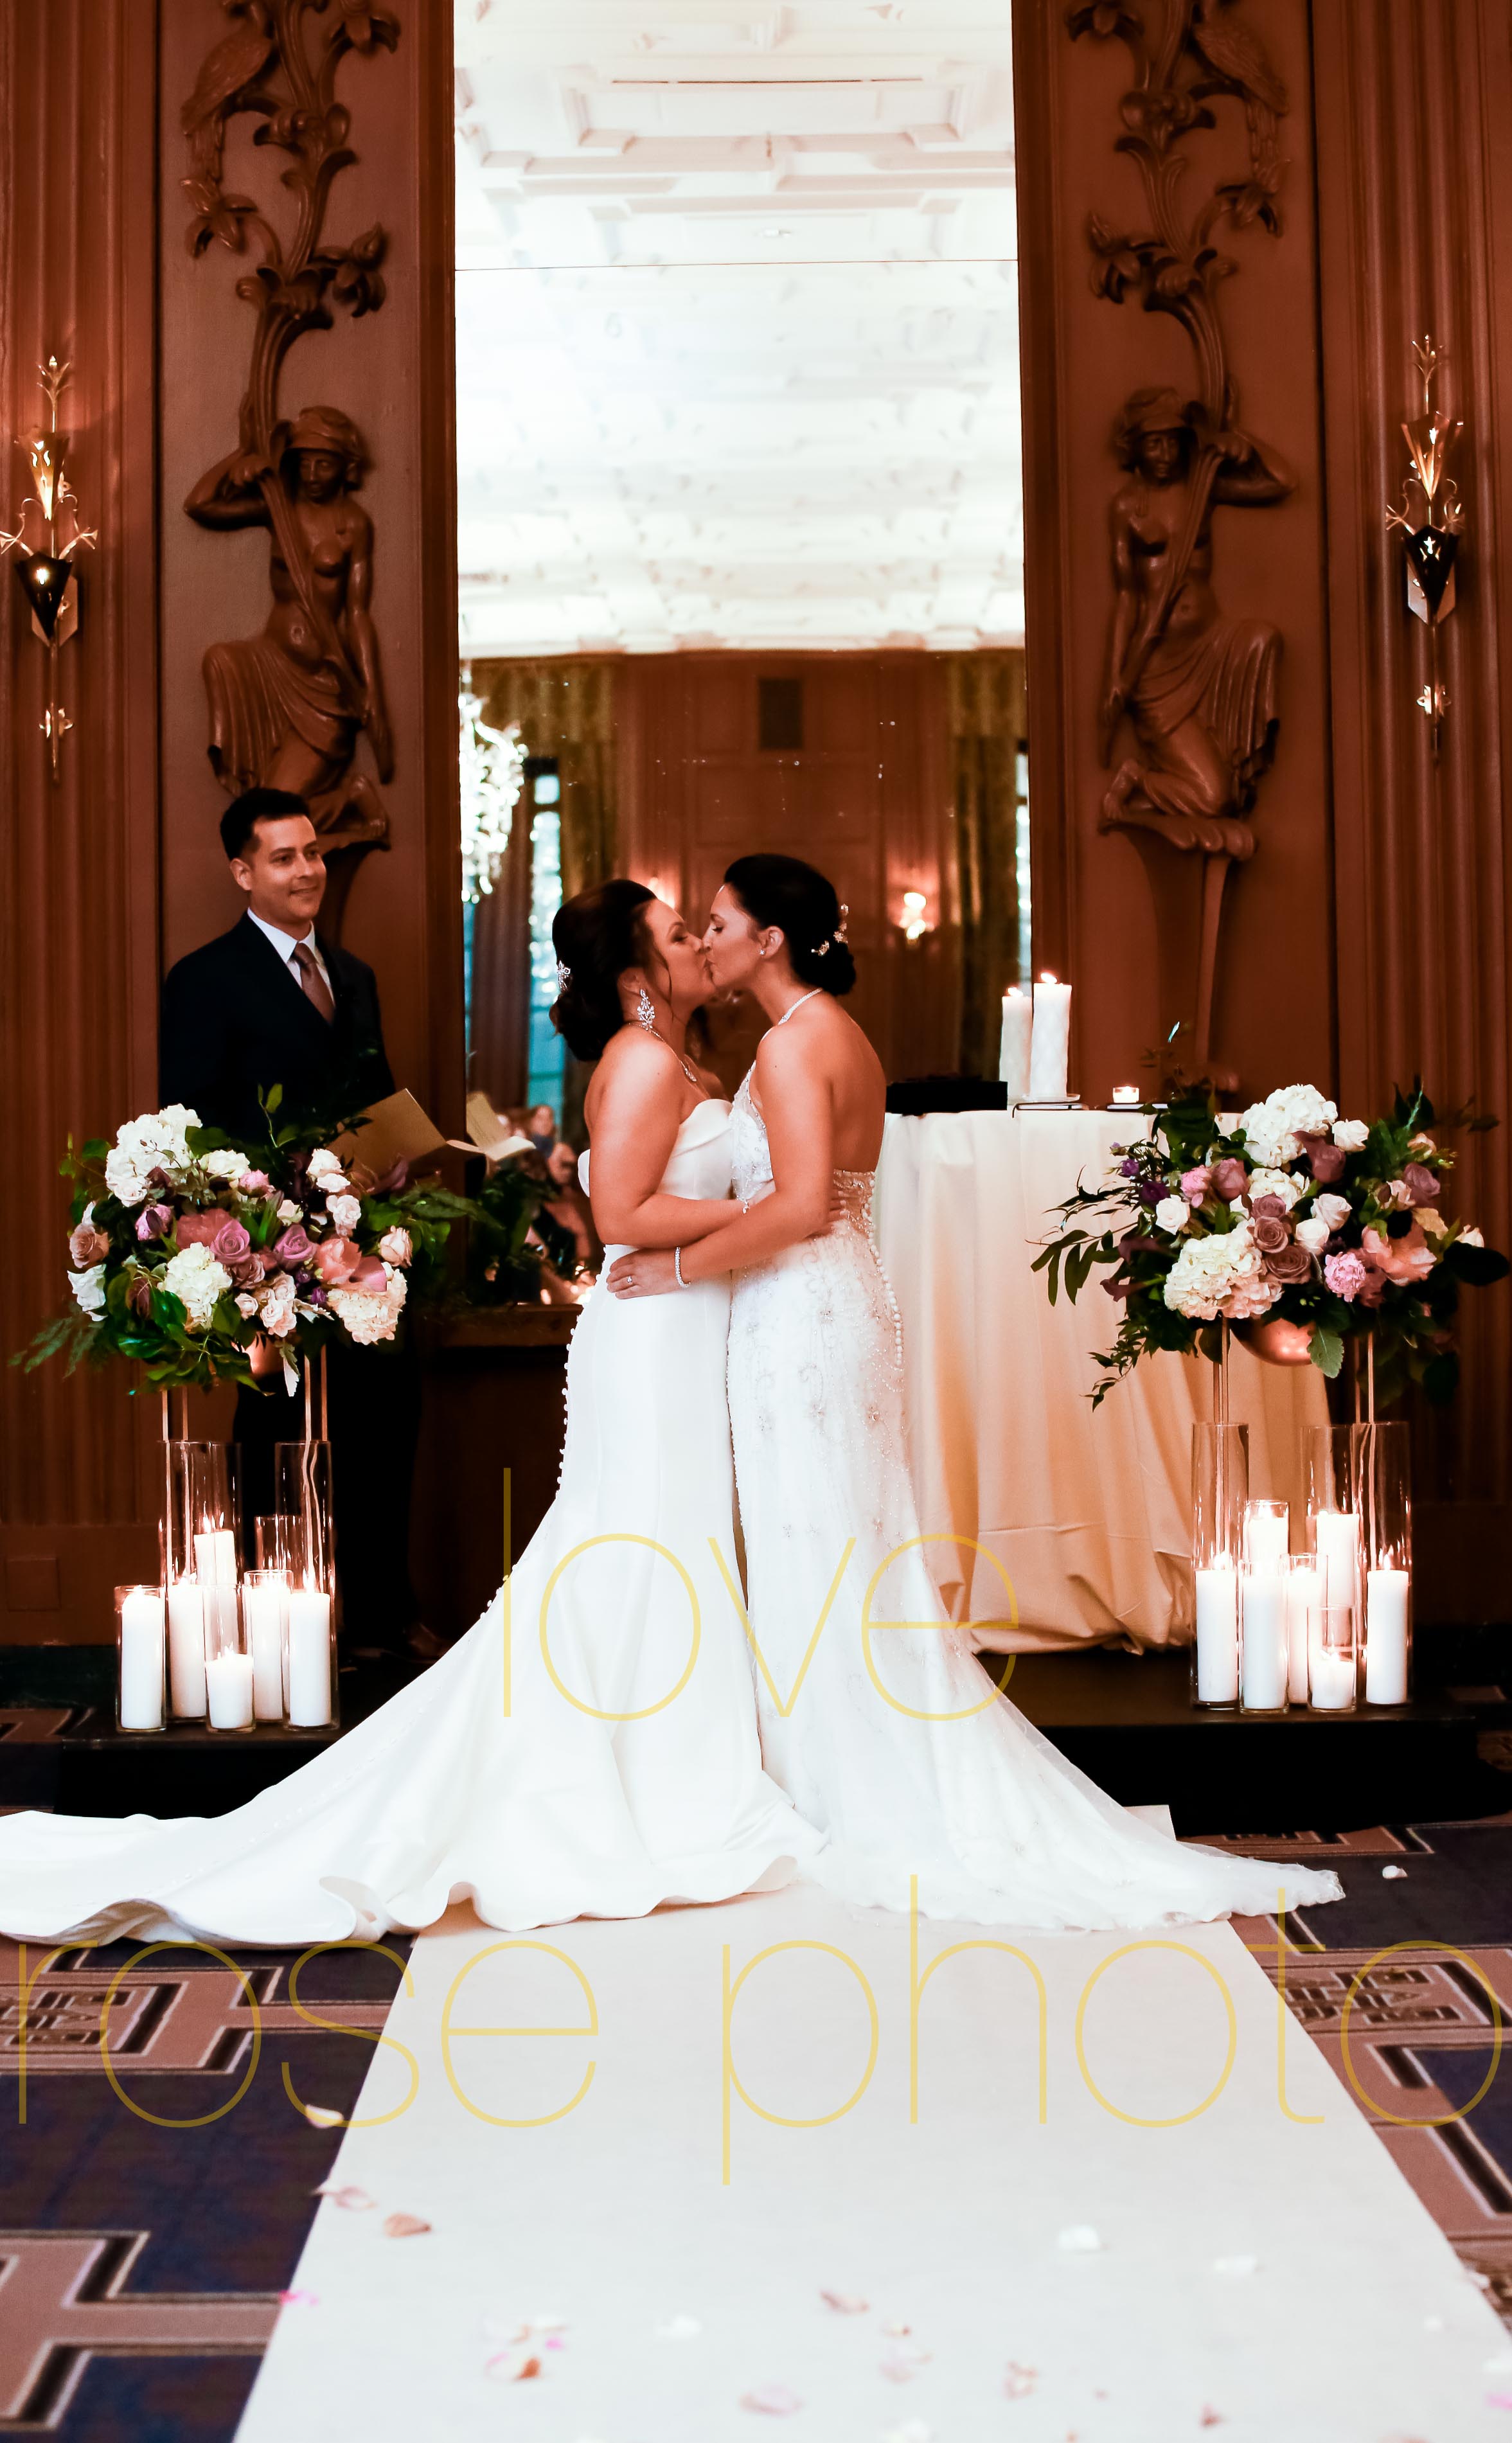 sophie + melissa love rose photo gay wedding chicago pride 2019 -63.jpg